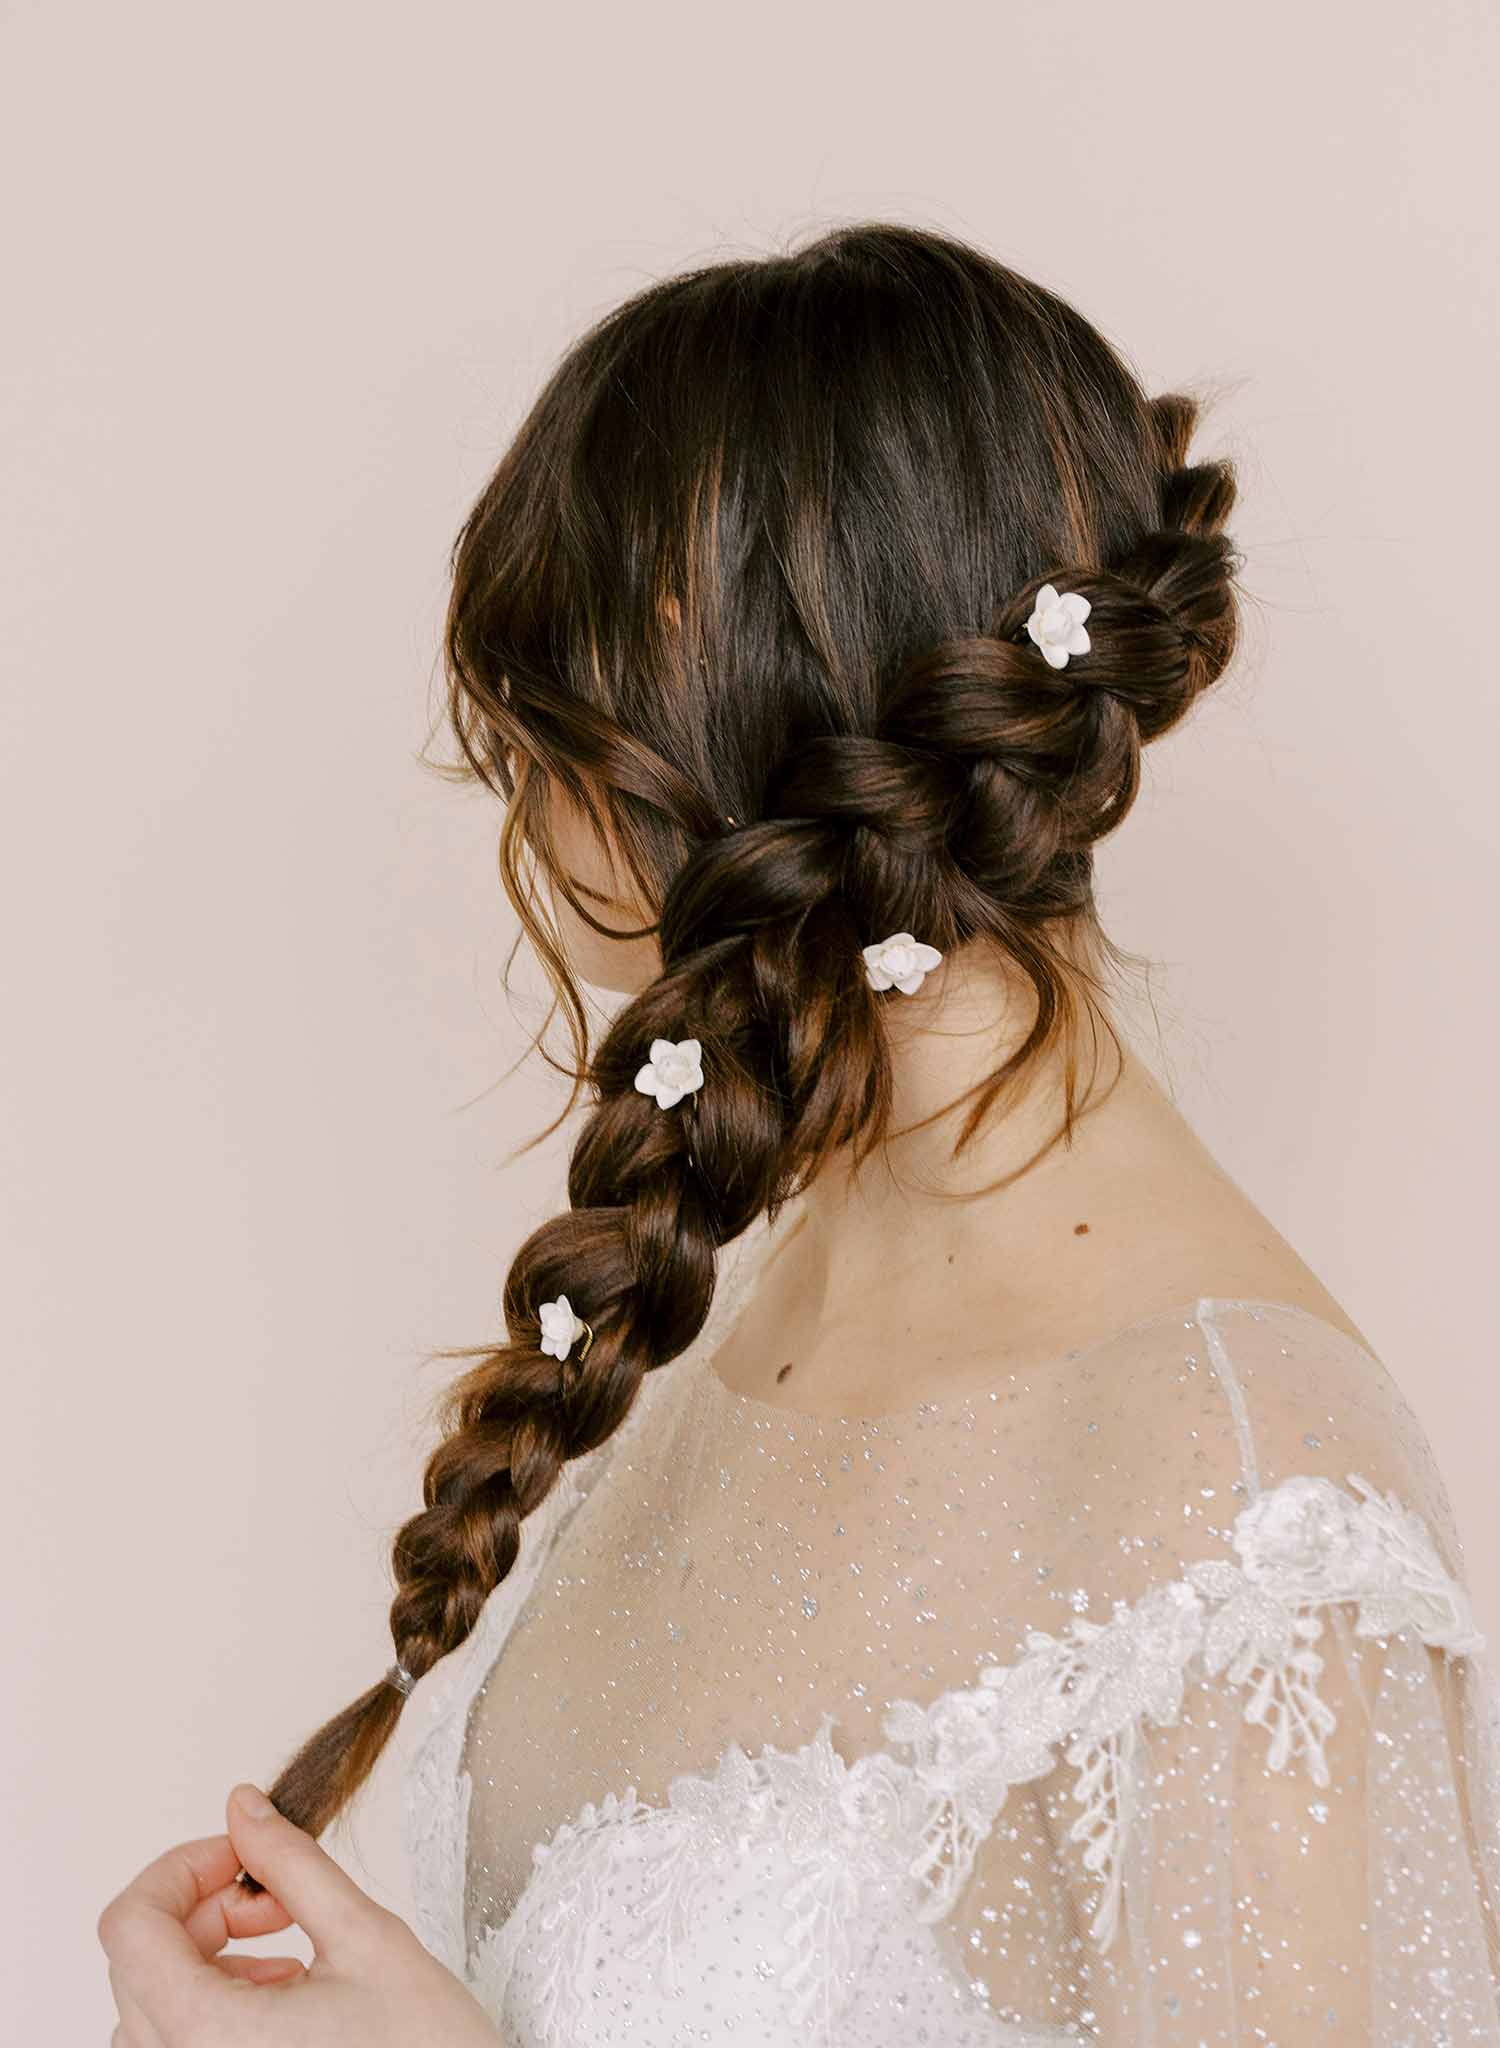 Floral bud bridal hair pin set of 5 - Style #2168